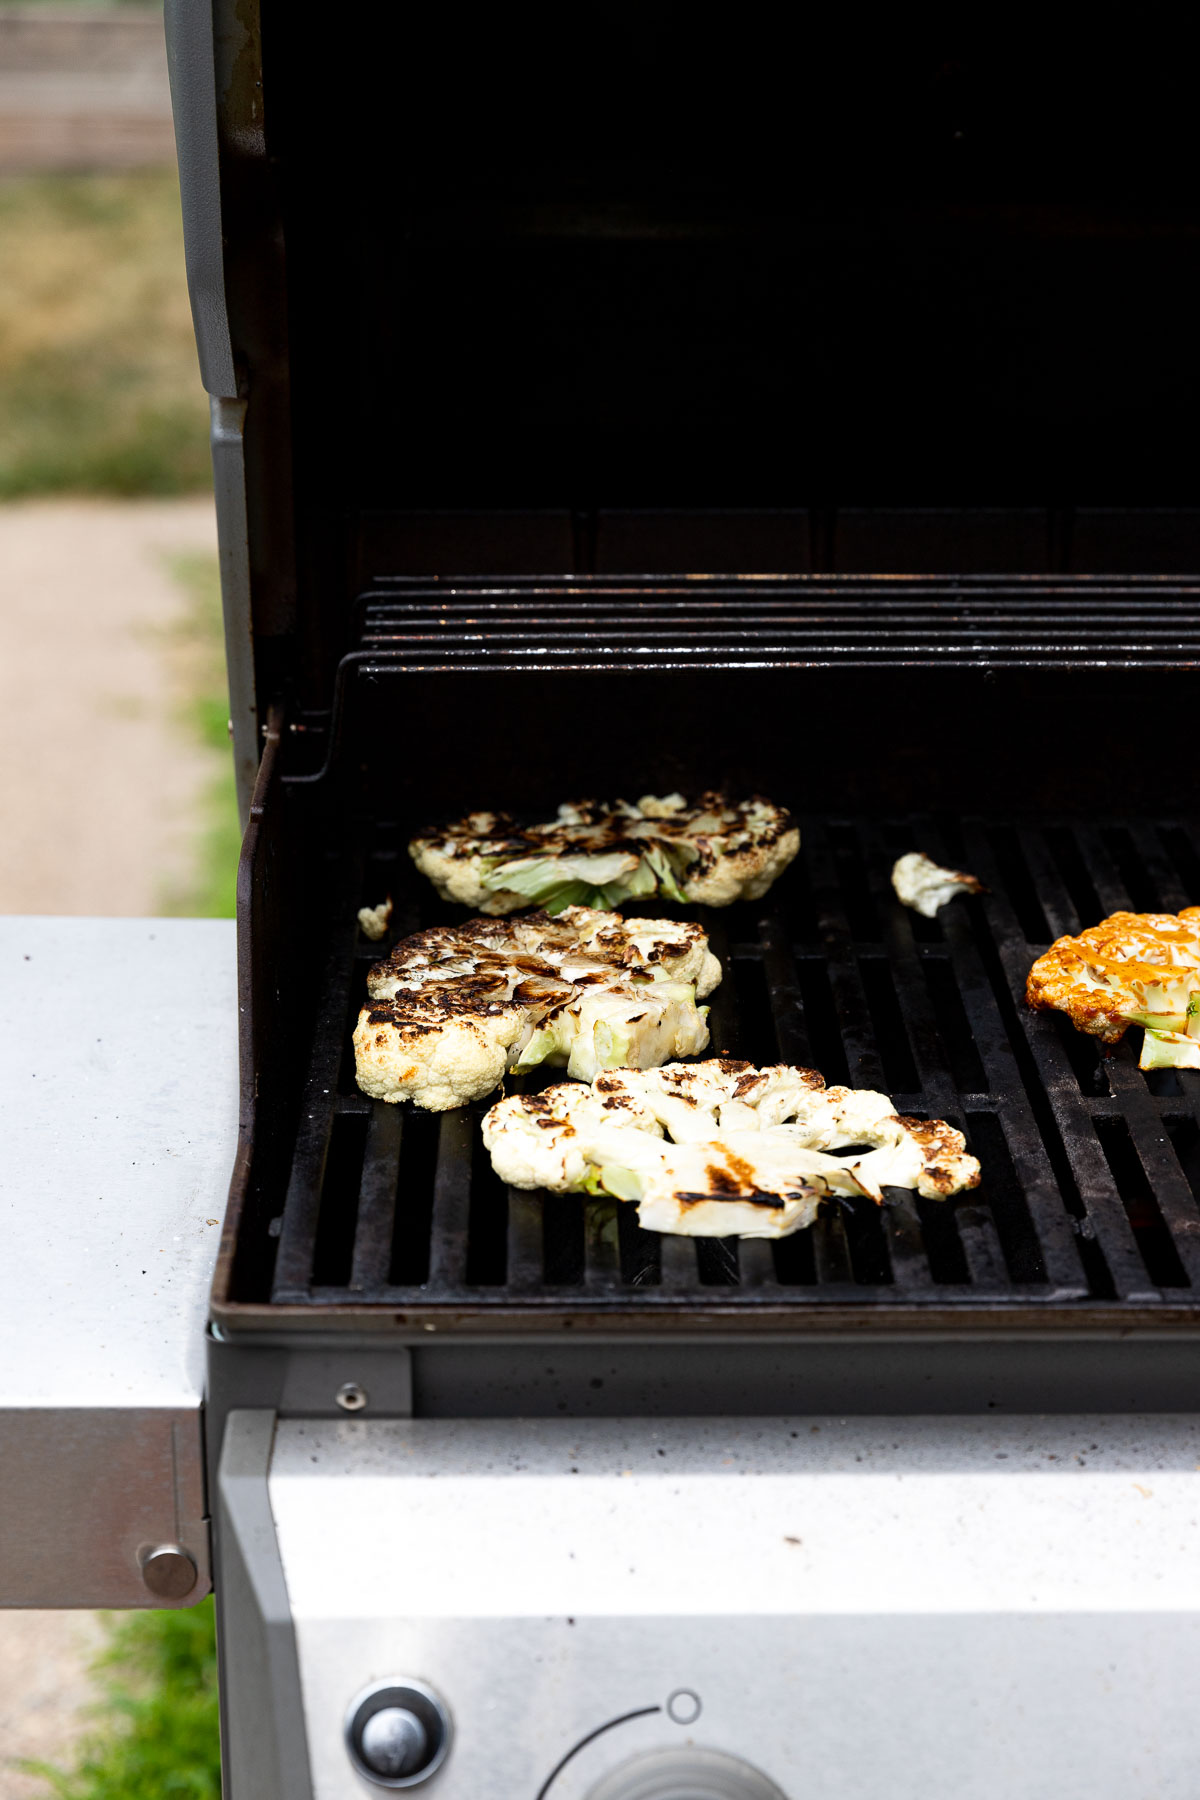 Cauliflower steaks on the grill.